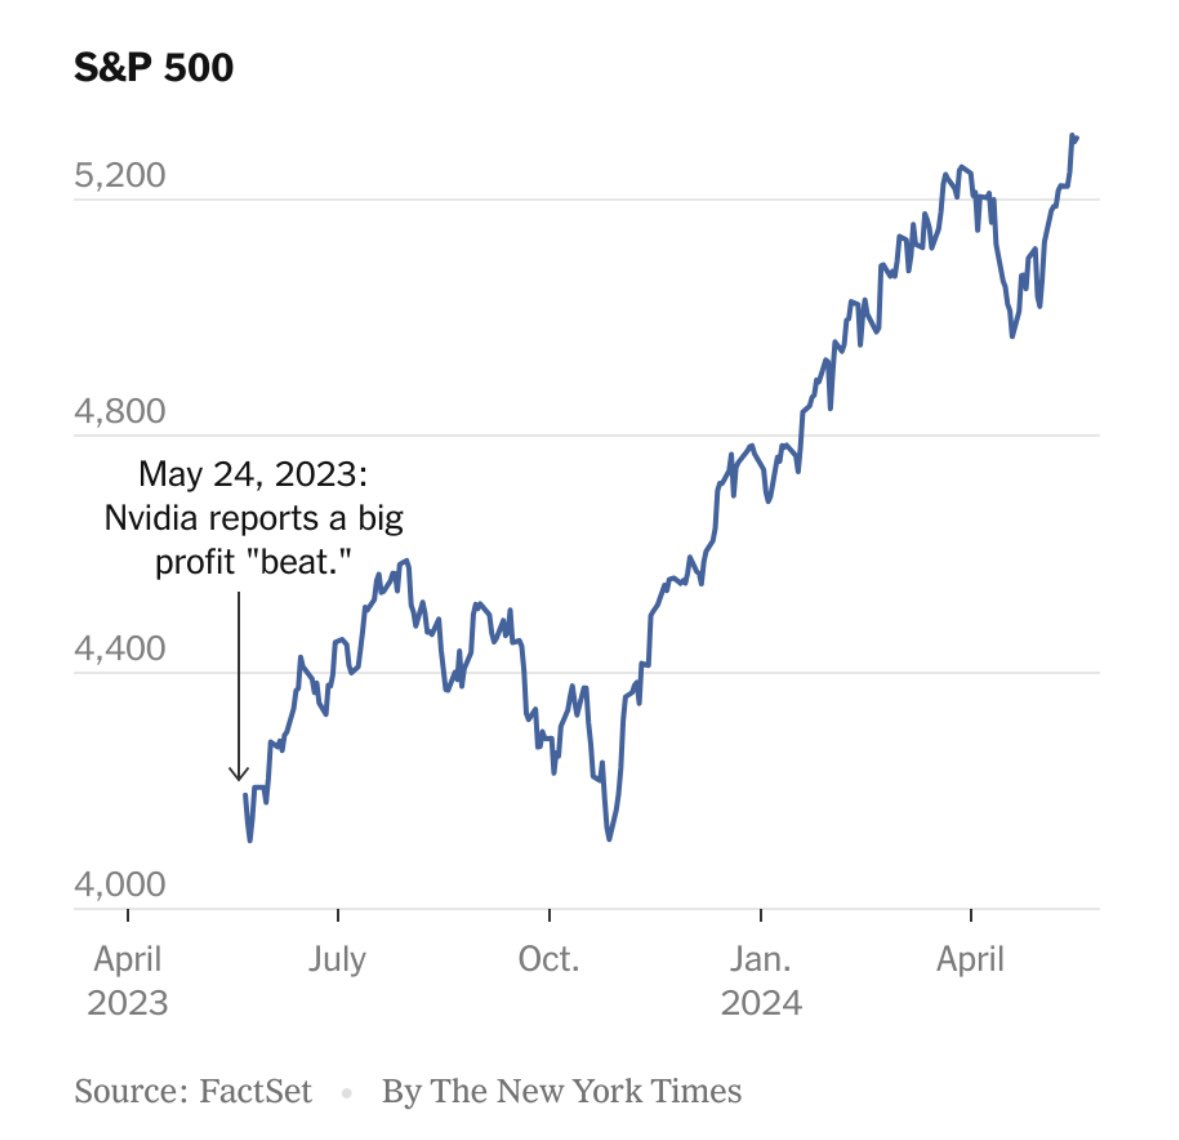 The S&P 500 loving this AI boom.